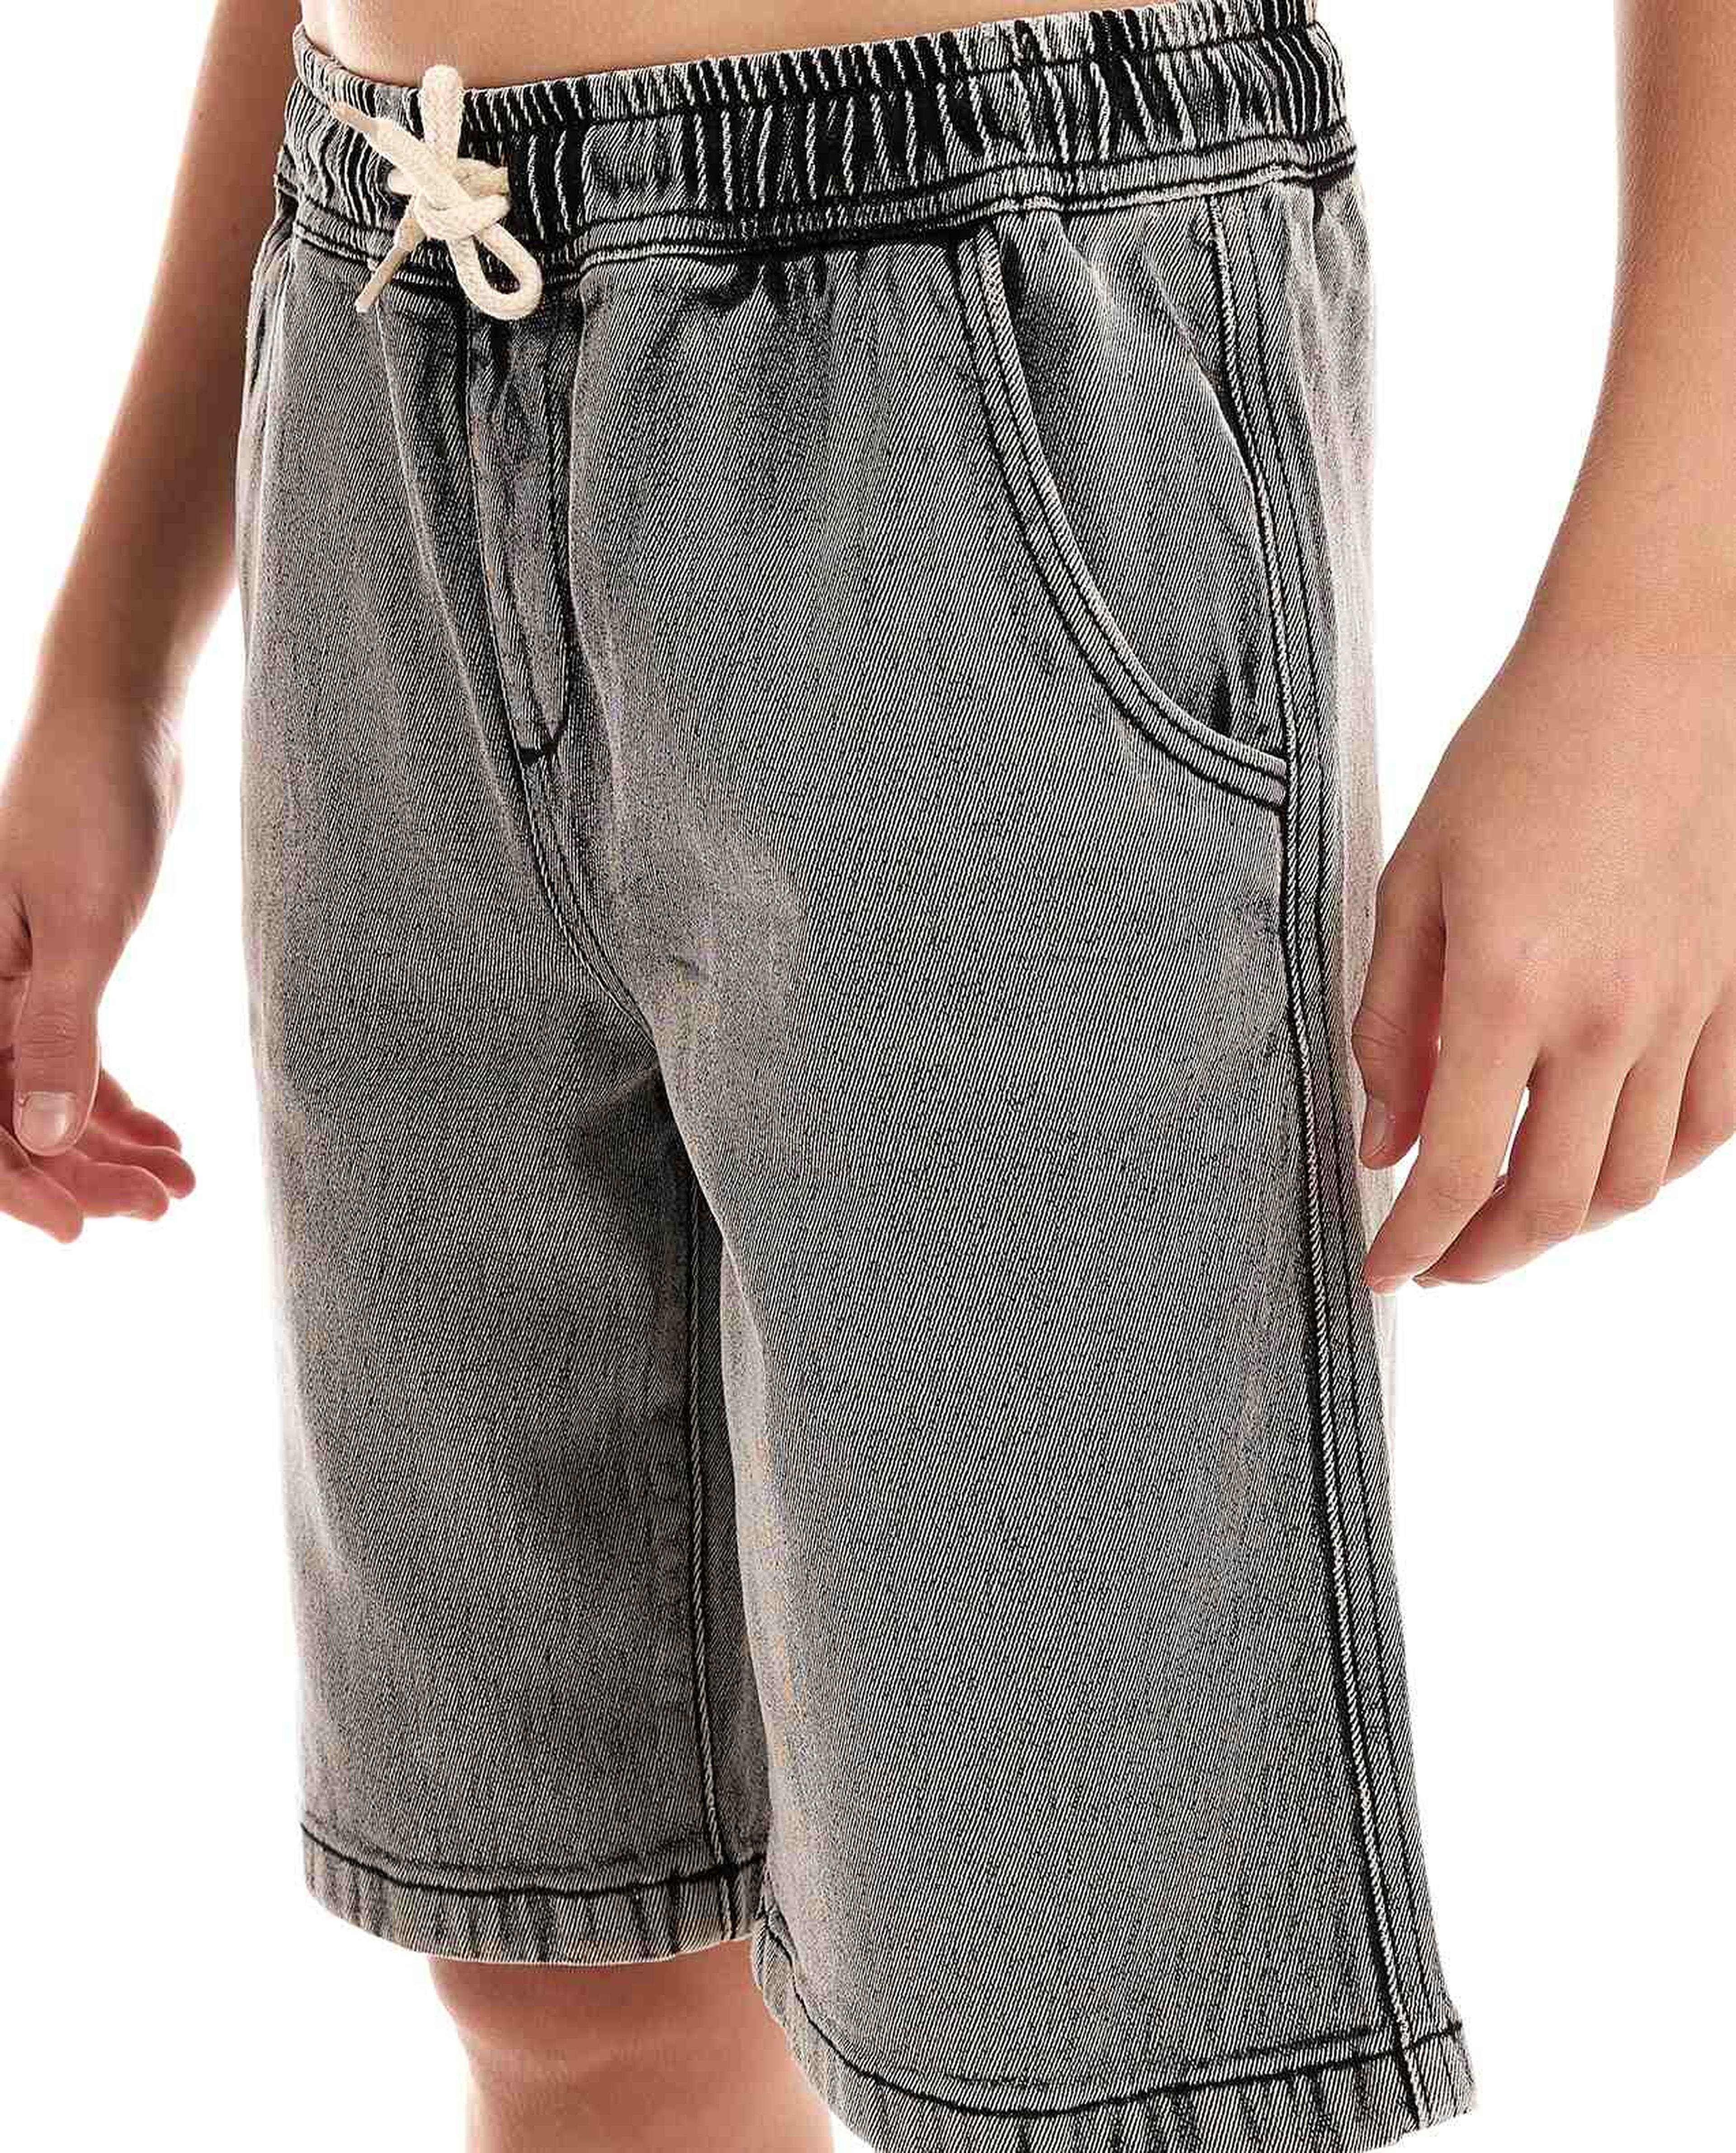 Washed Denim Shorts with Drawstring Waist